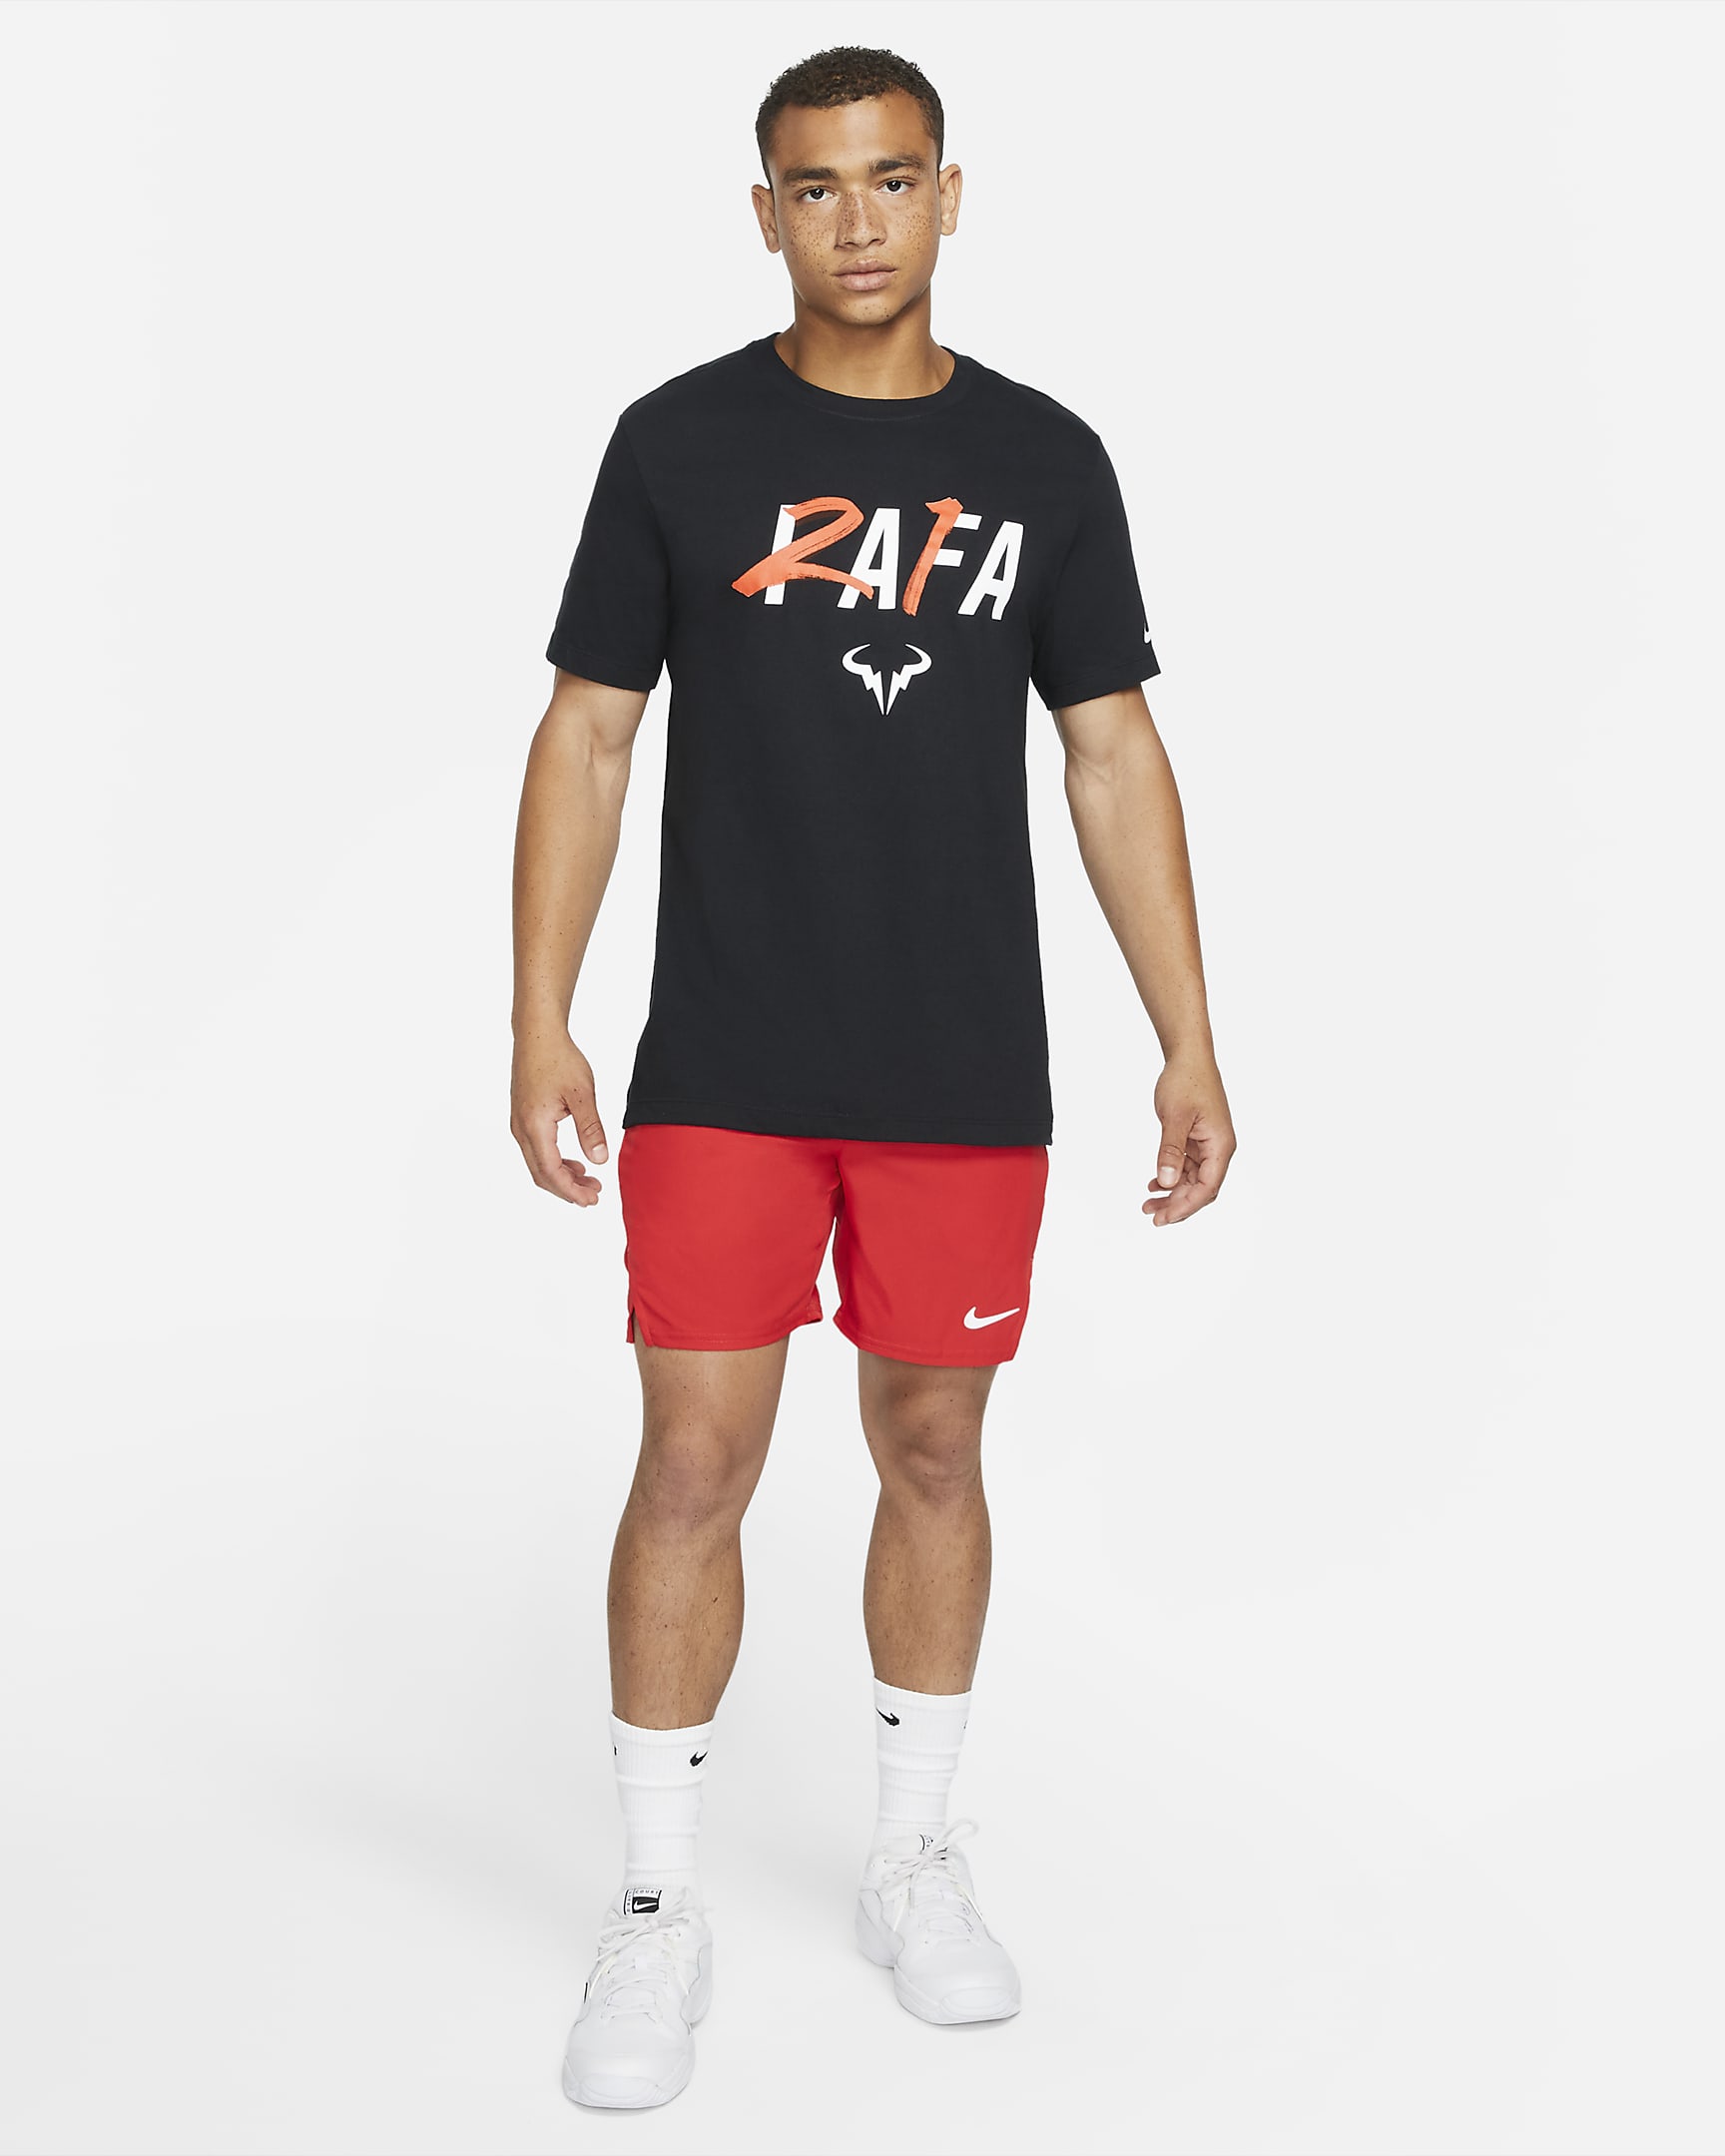 Rafa Winner Men's Tennis T-Shirt - Black